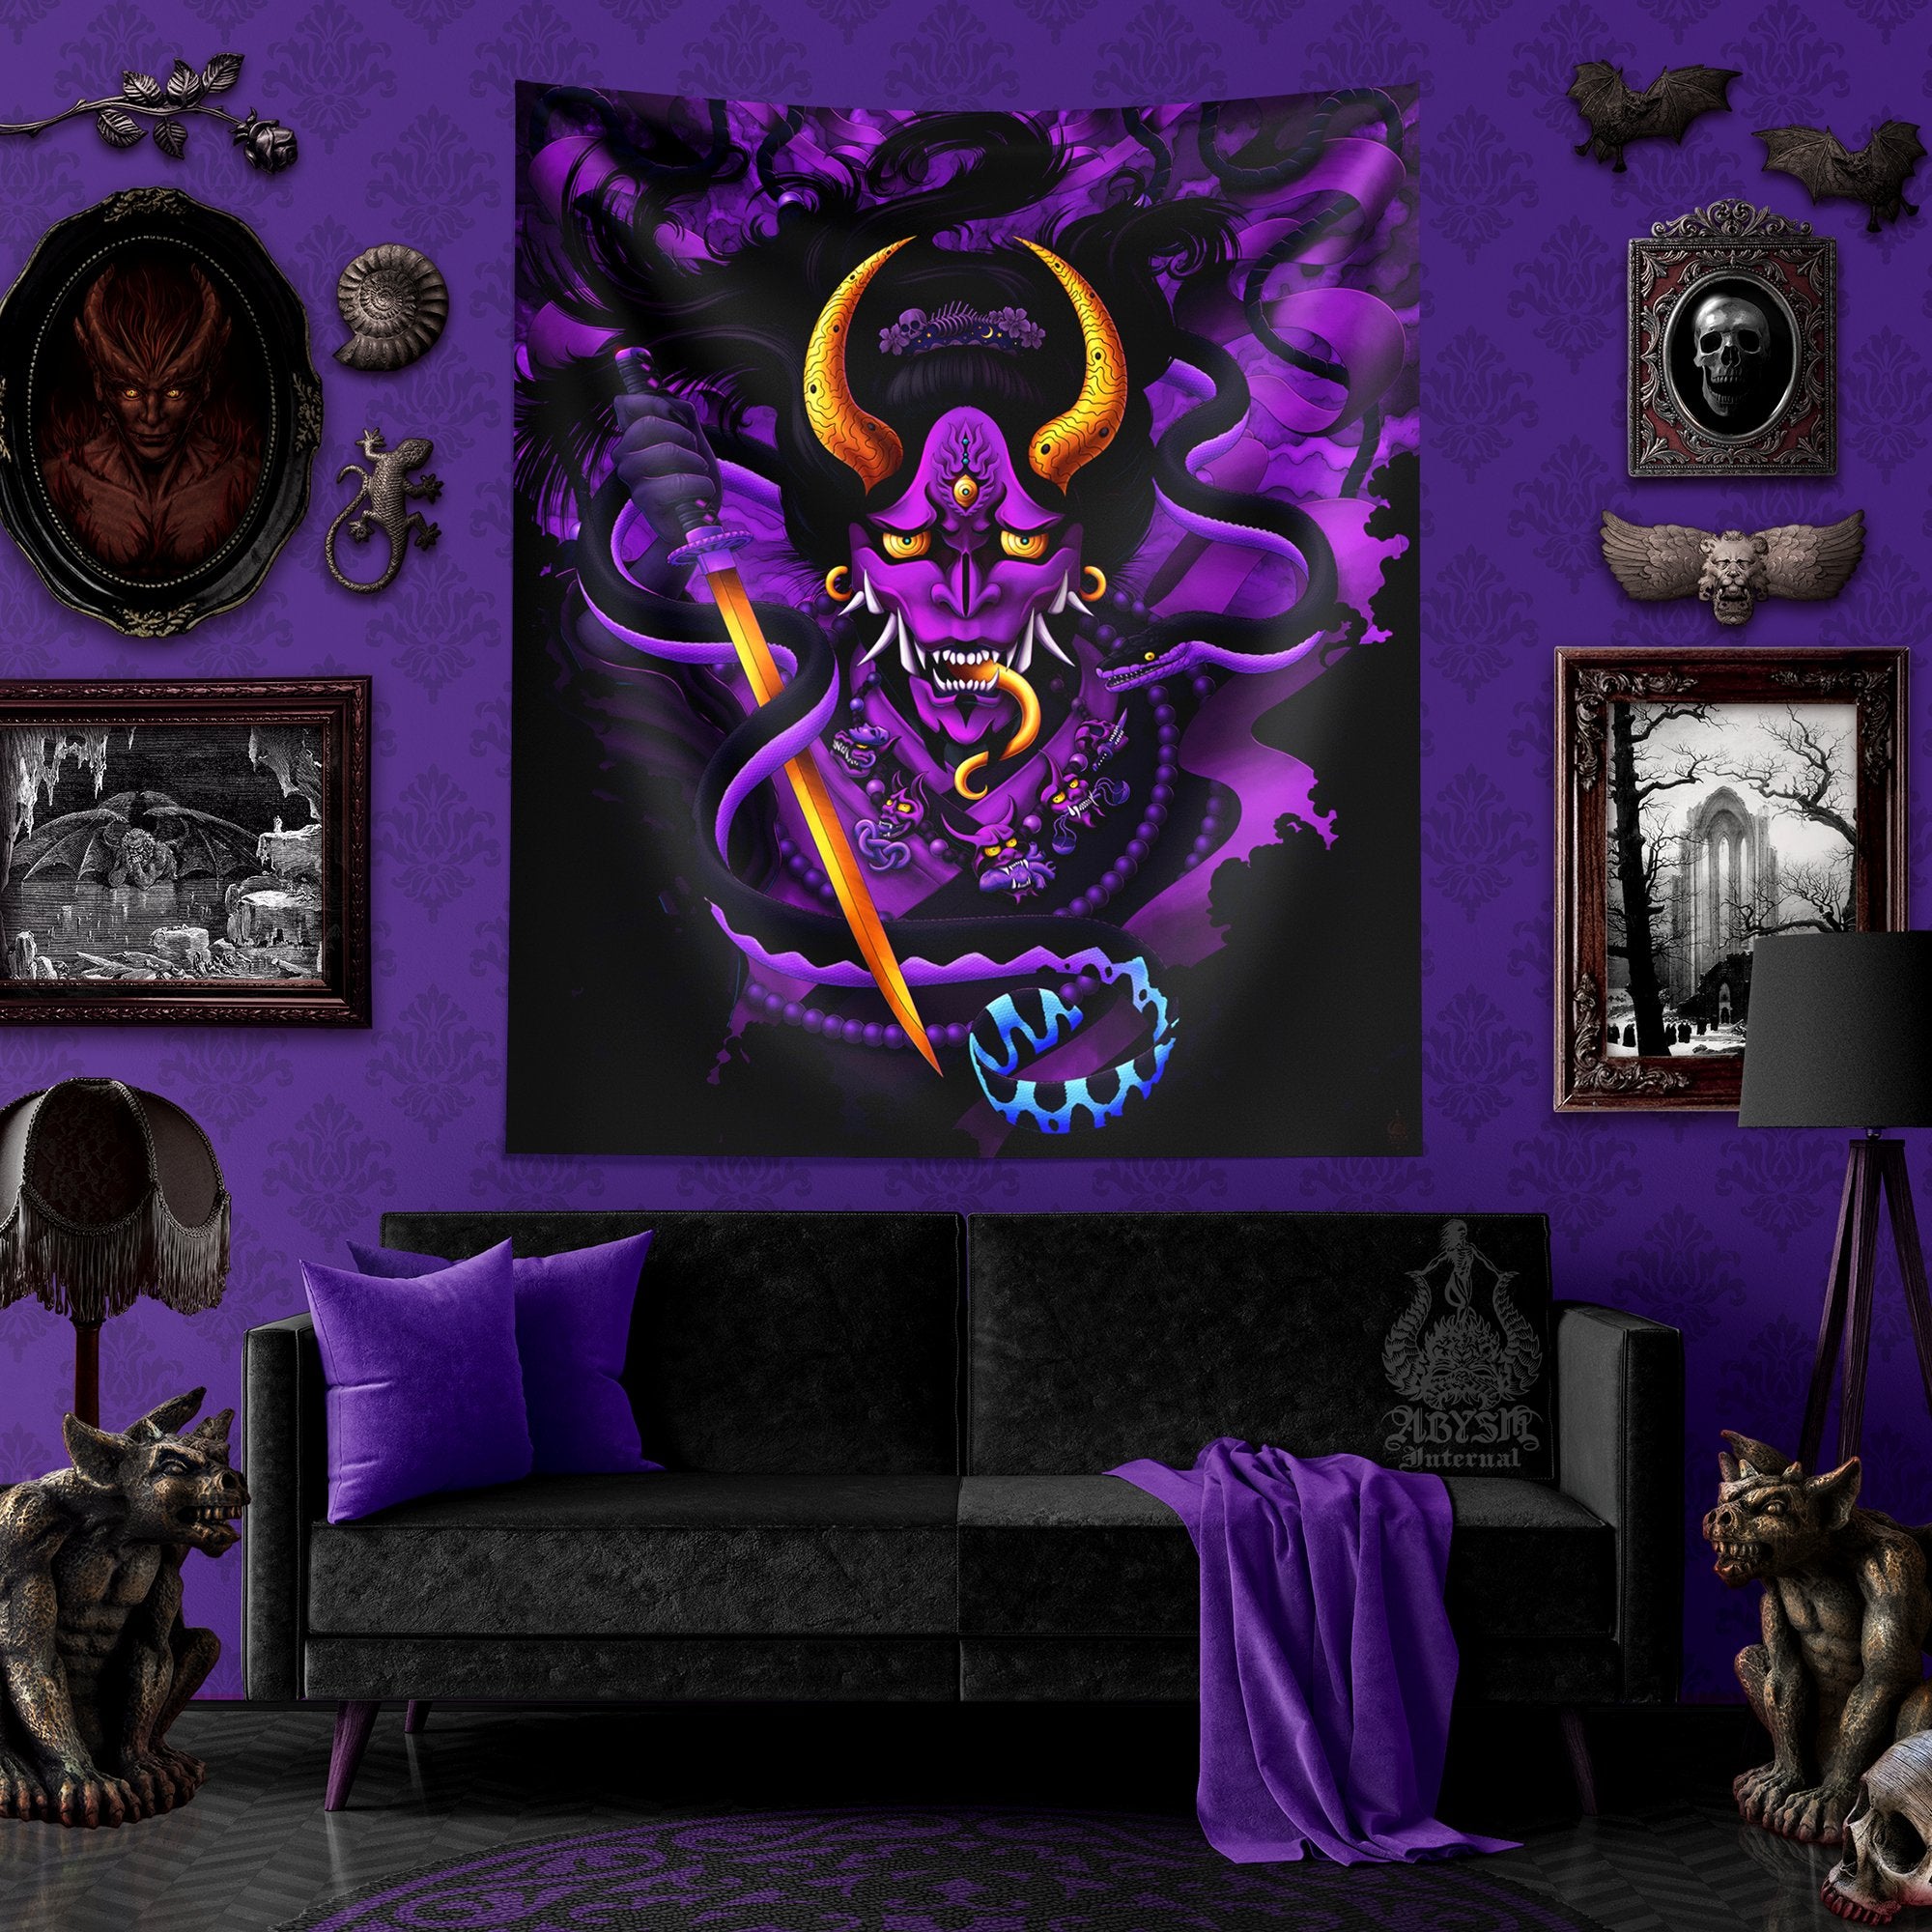 Hannya Tapestry, Pastel Goth Japanese Demon and Snake Wall Hanging, Anime, Manga and Gamer Room Decor, Vertical Art Print - Black Purple - Abysm Internal